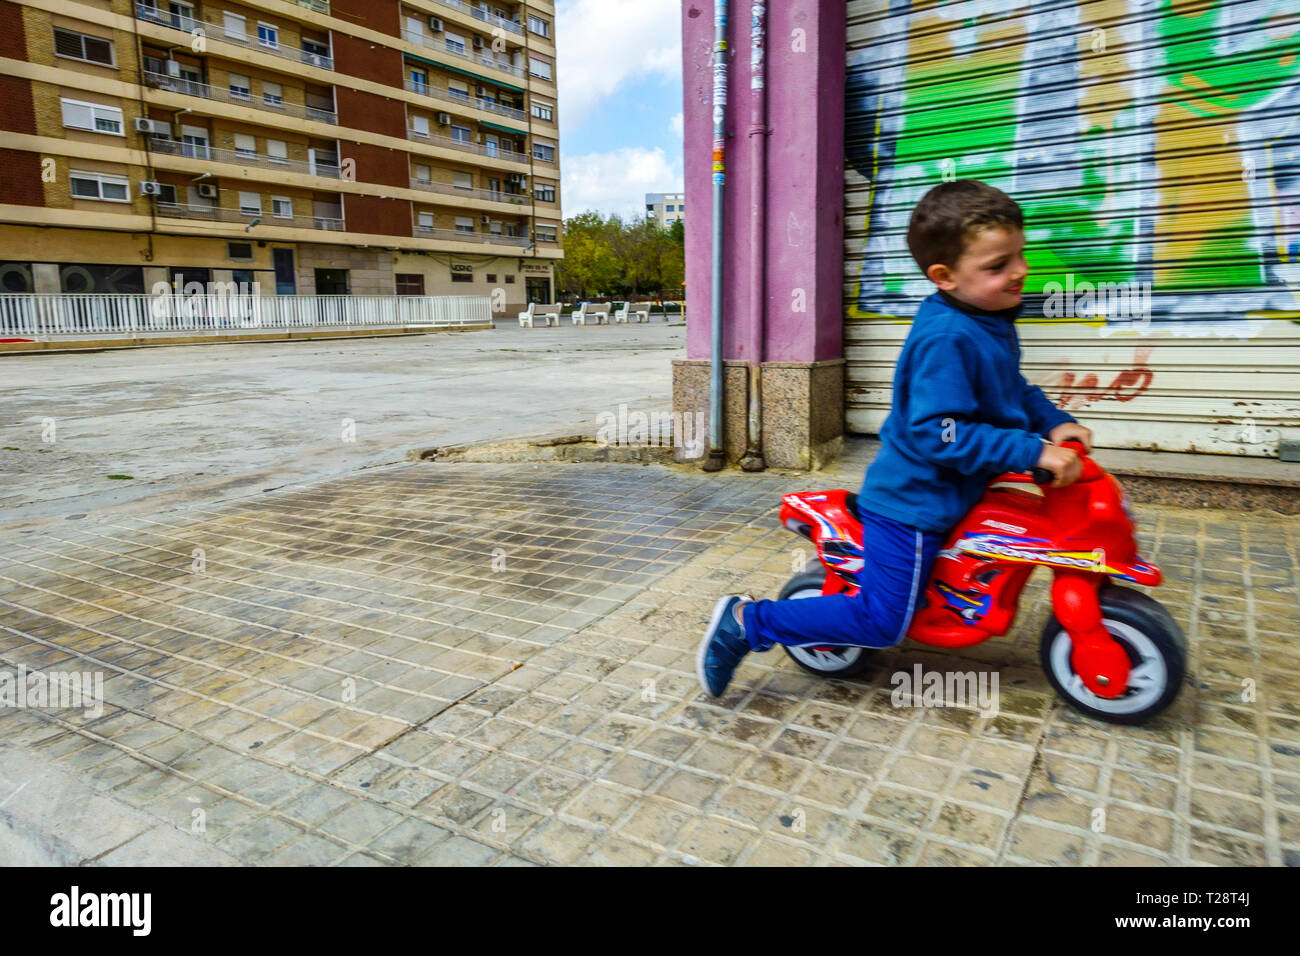 Toddler on plastic motorbike toy, Valencia, Campanar barrio, Spain Toddler ride on Stock Photo